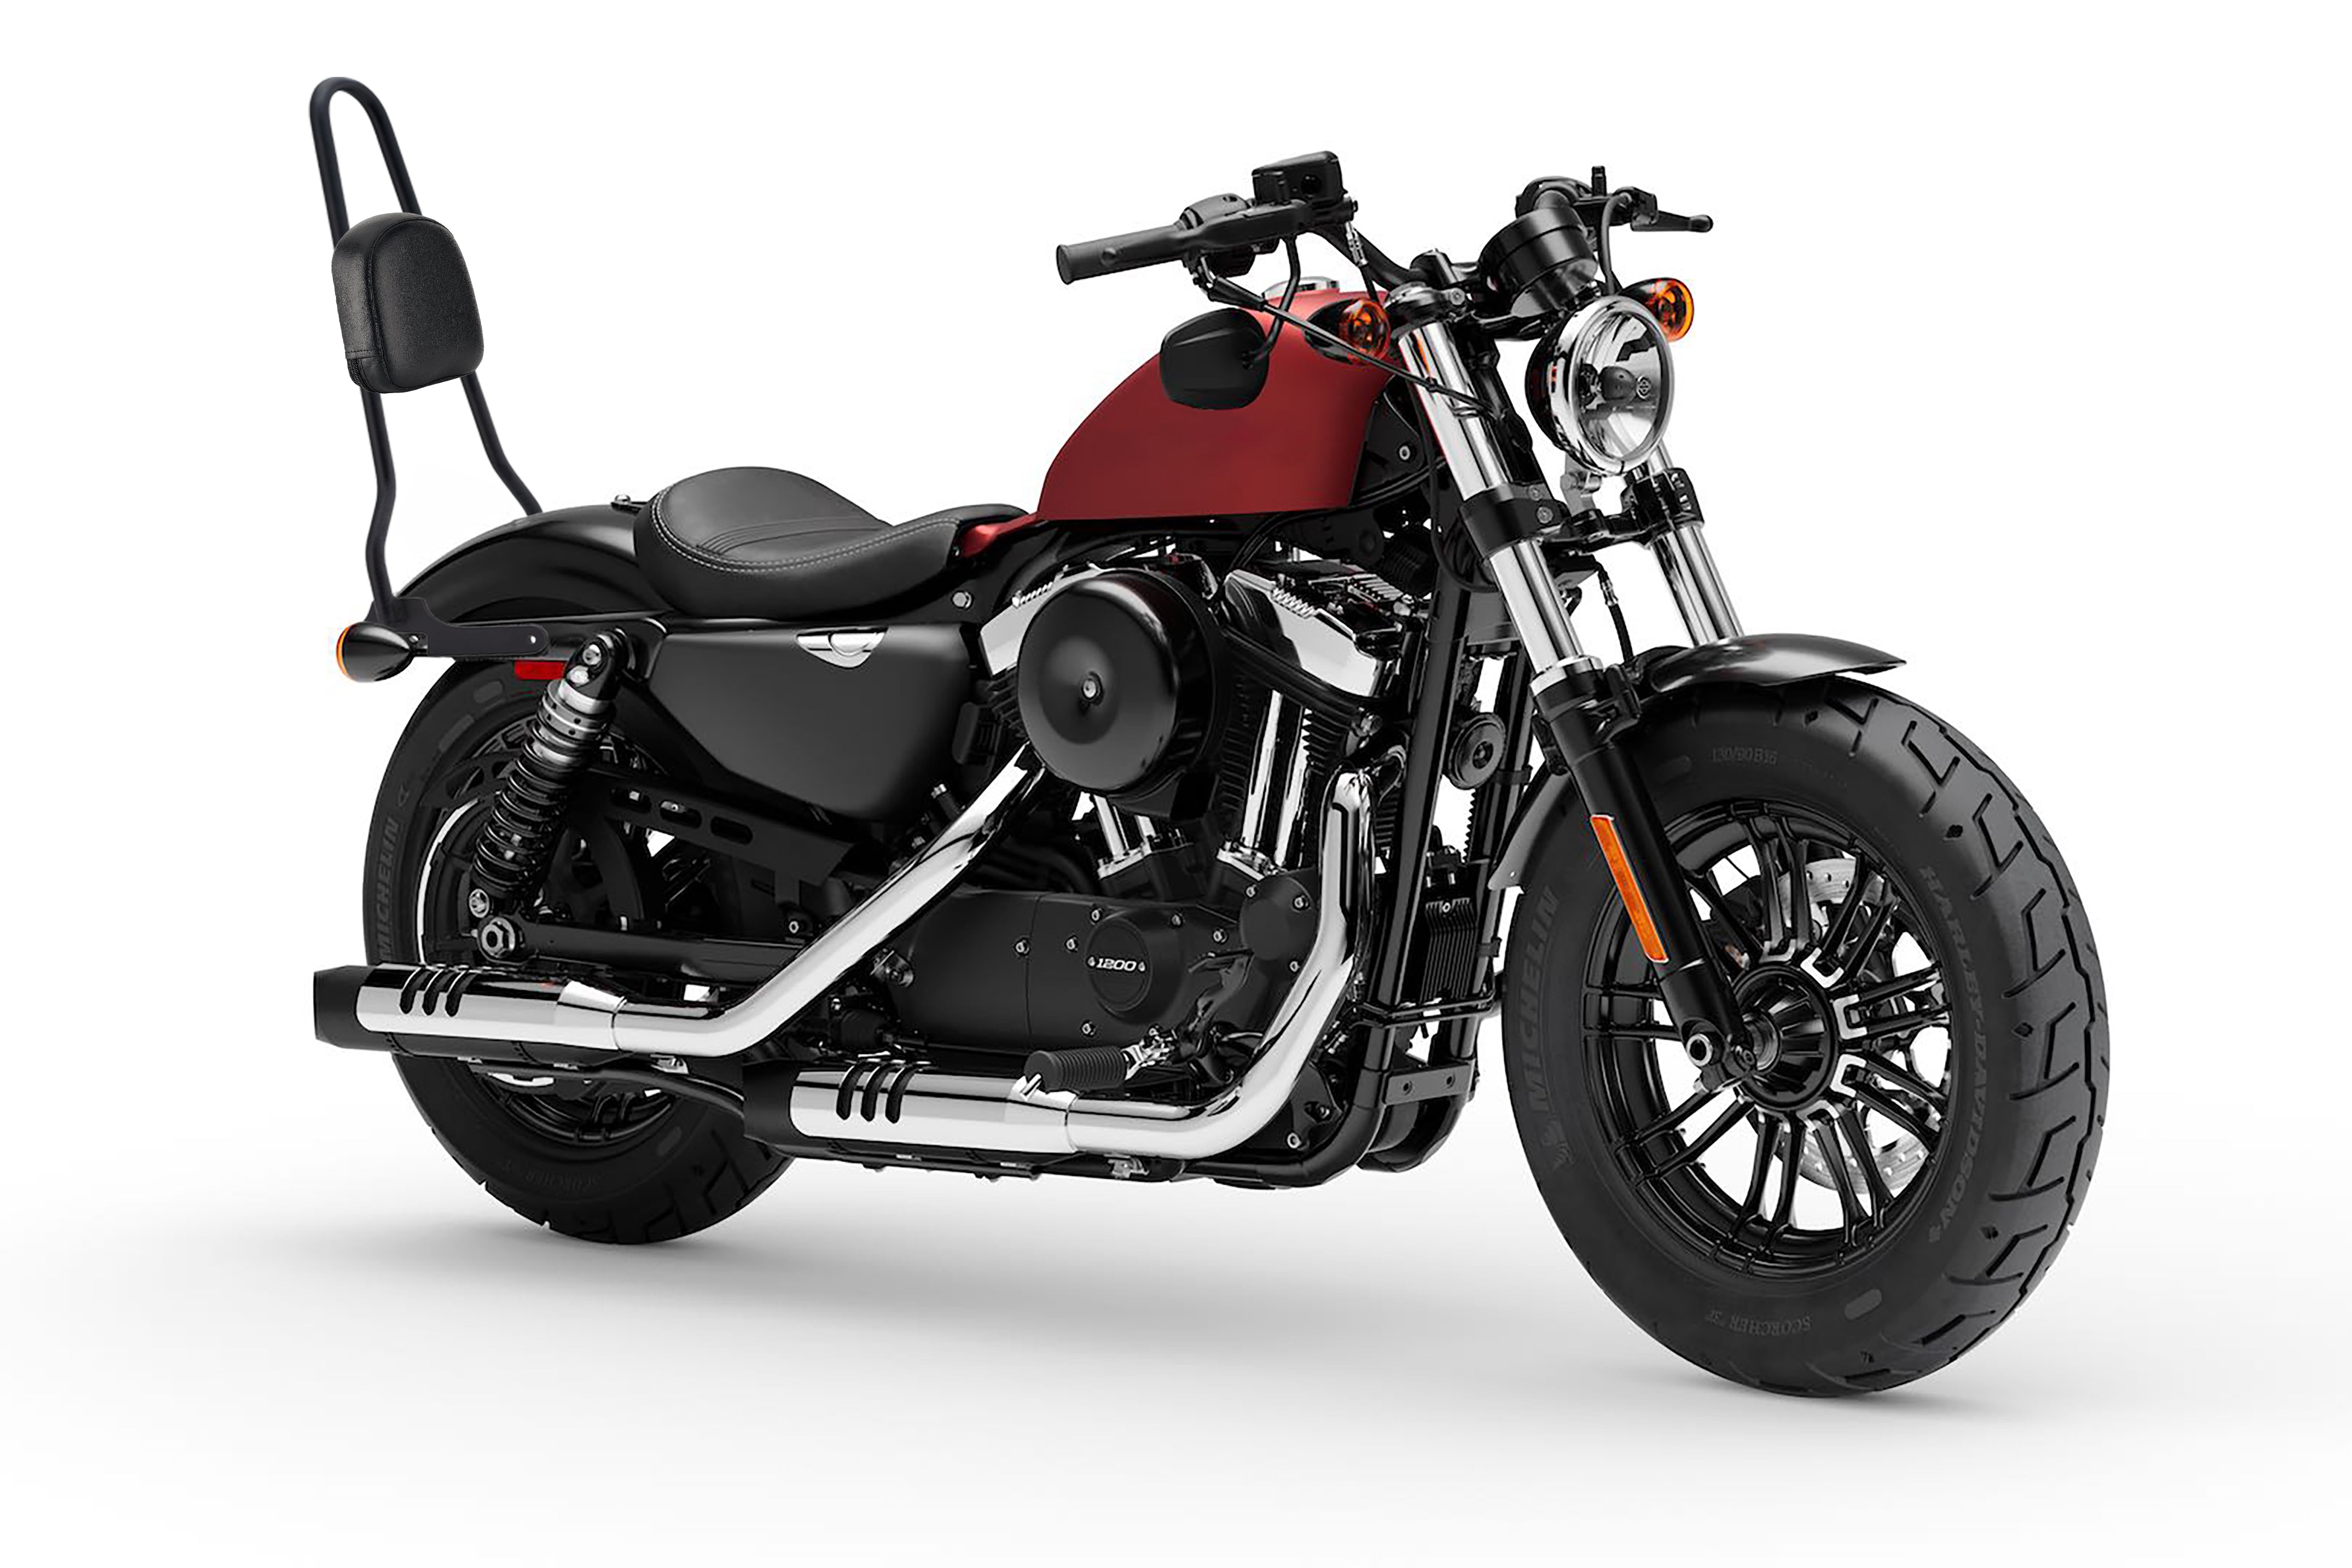 Viking Iron Born Plain Leather Short Motorcycle Sissy Bar Pad for Harley Davidson Bag on Bike View @expand